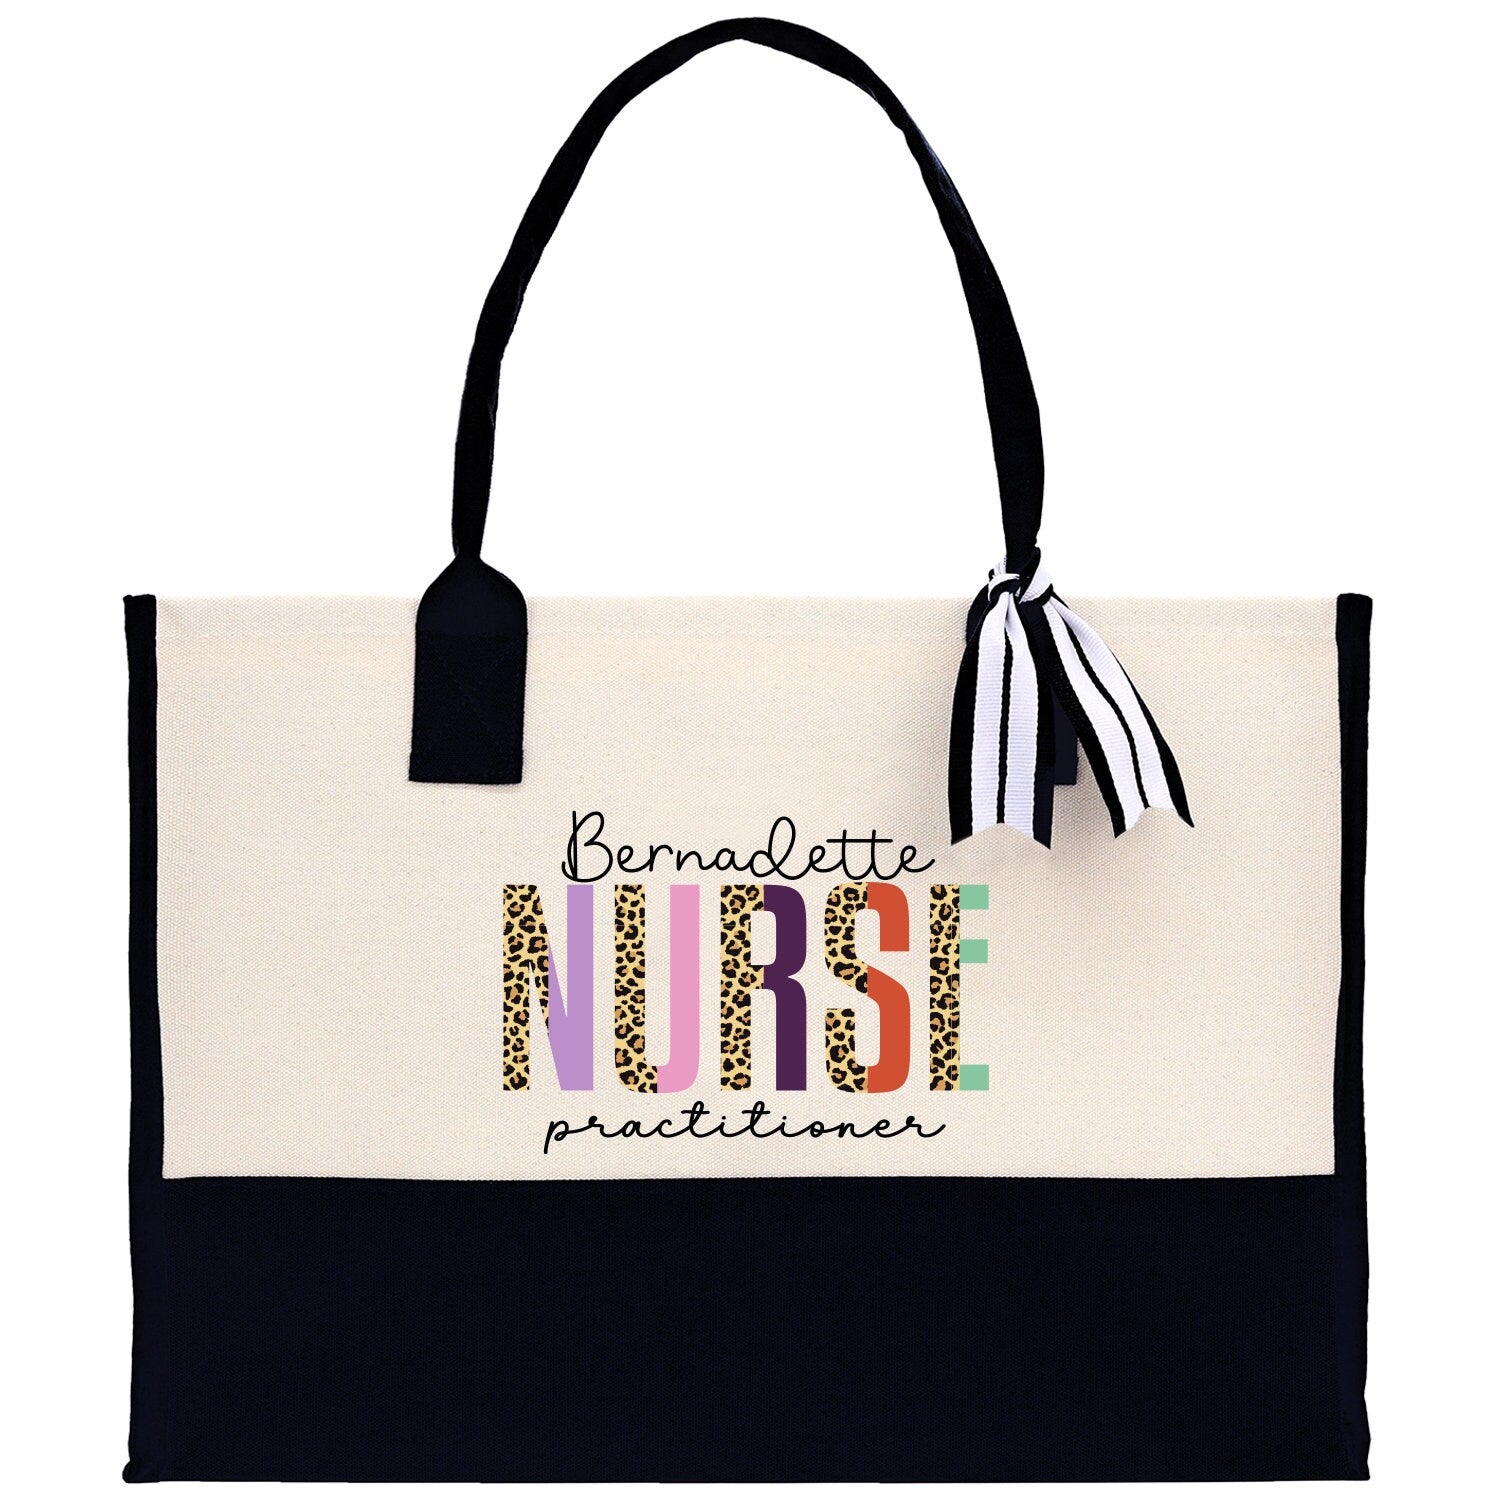 Nurse Personalized Tote Bag Nurse Gift Registered Nurse Tote RN Tote RN Gift Future Nurse Gift Nursing Student Gift Nurse Graduation Gift